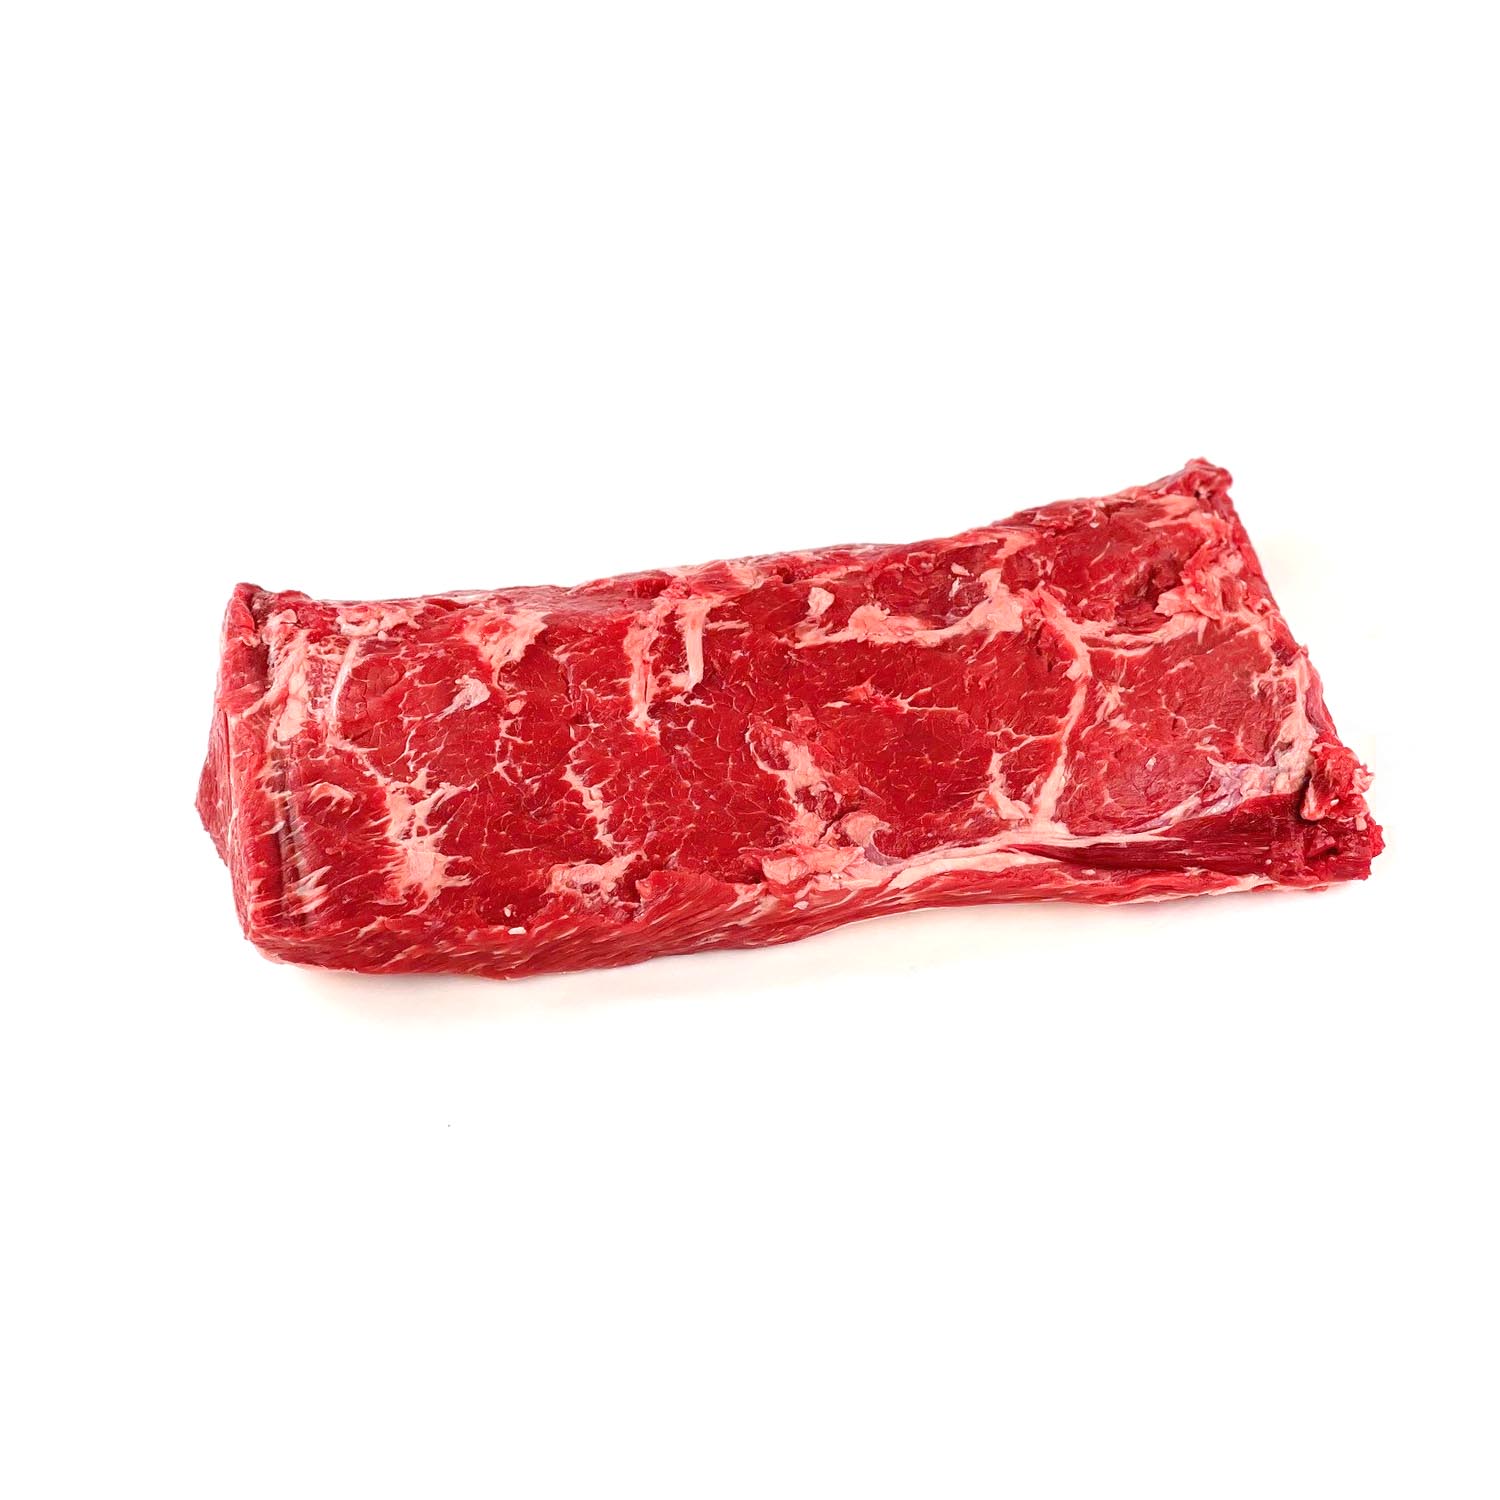 Ungraded Beef Strip Loin - Beef